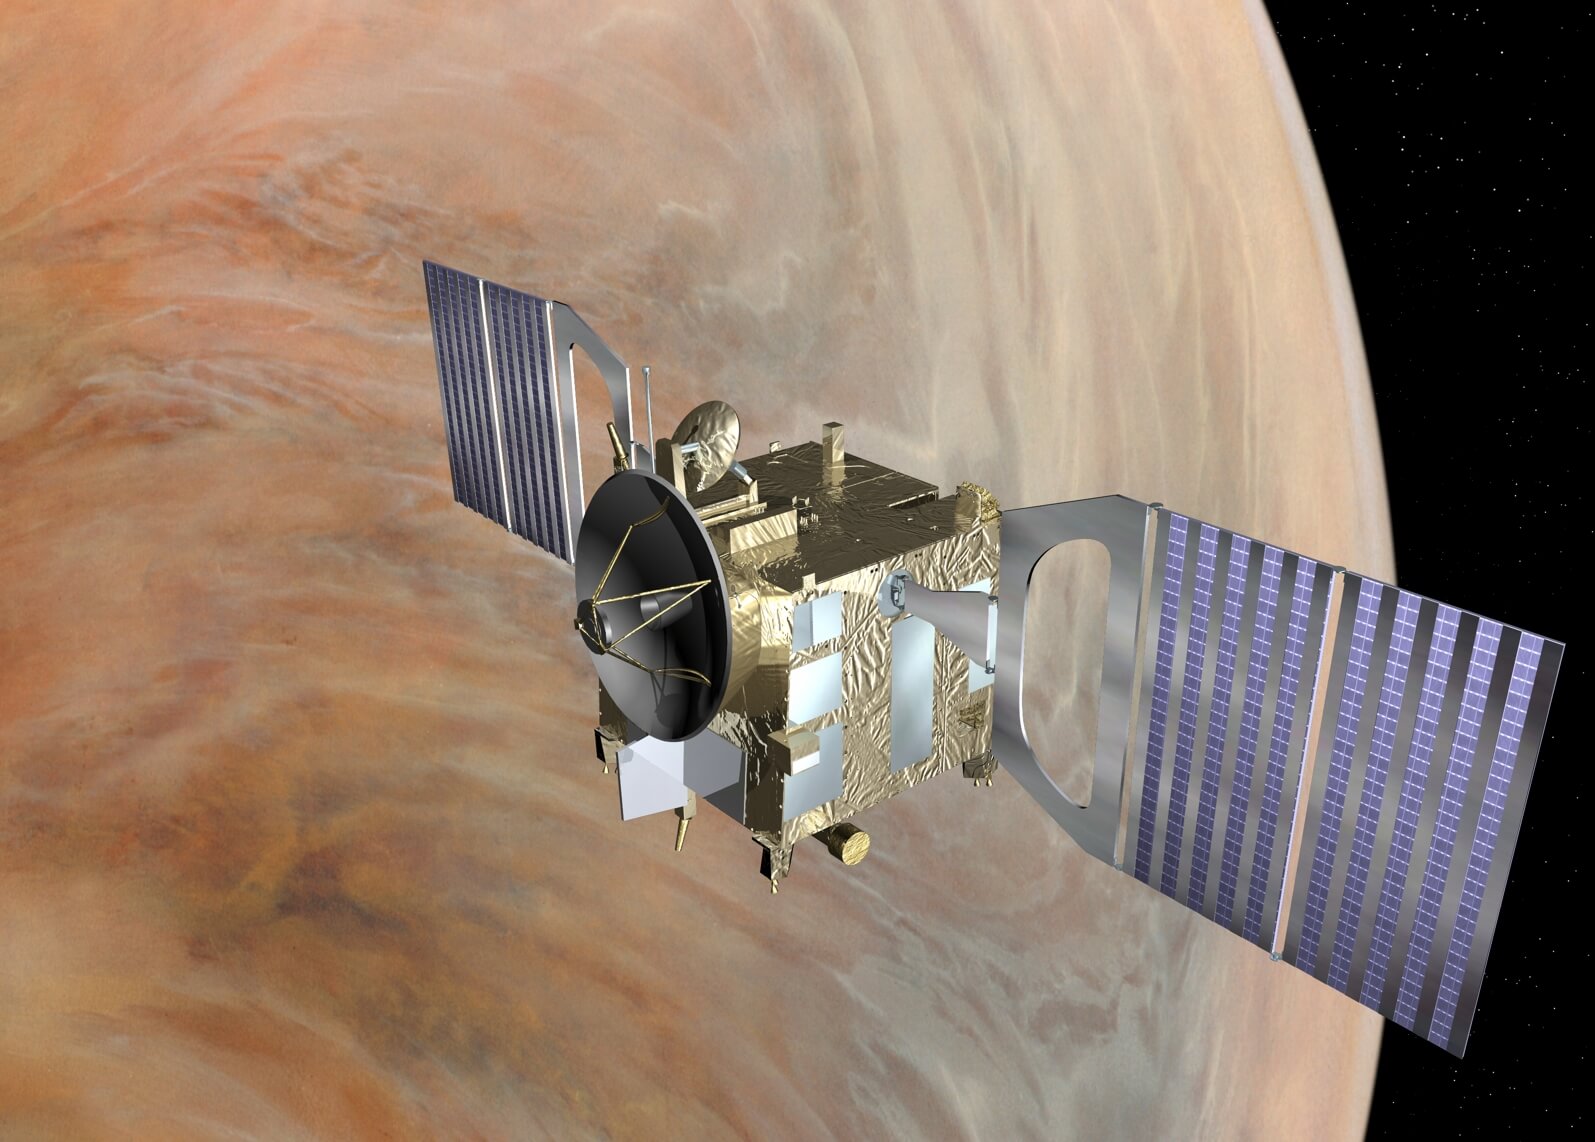 The Venus Express spacecraft in its heyday. Figure: European Space Agency